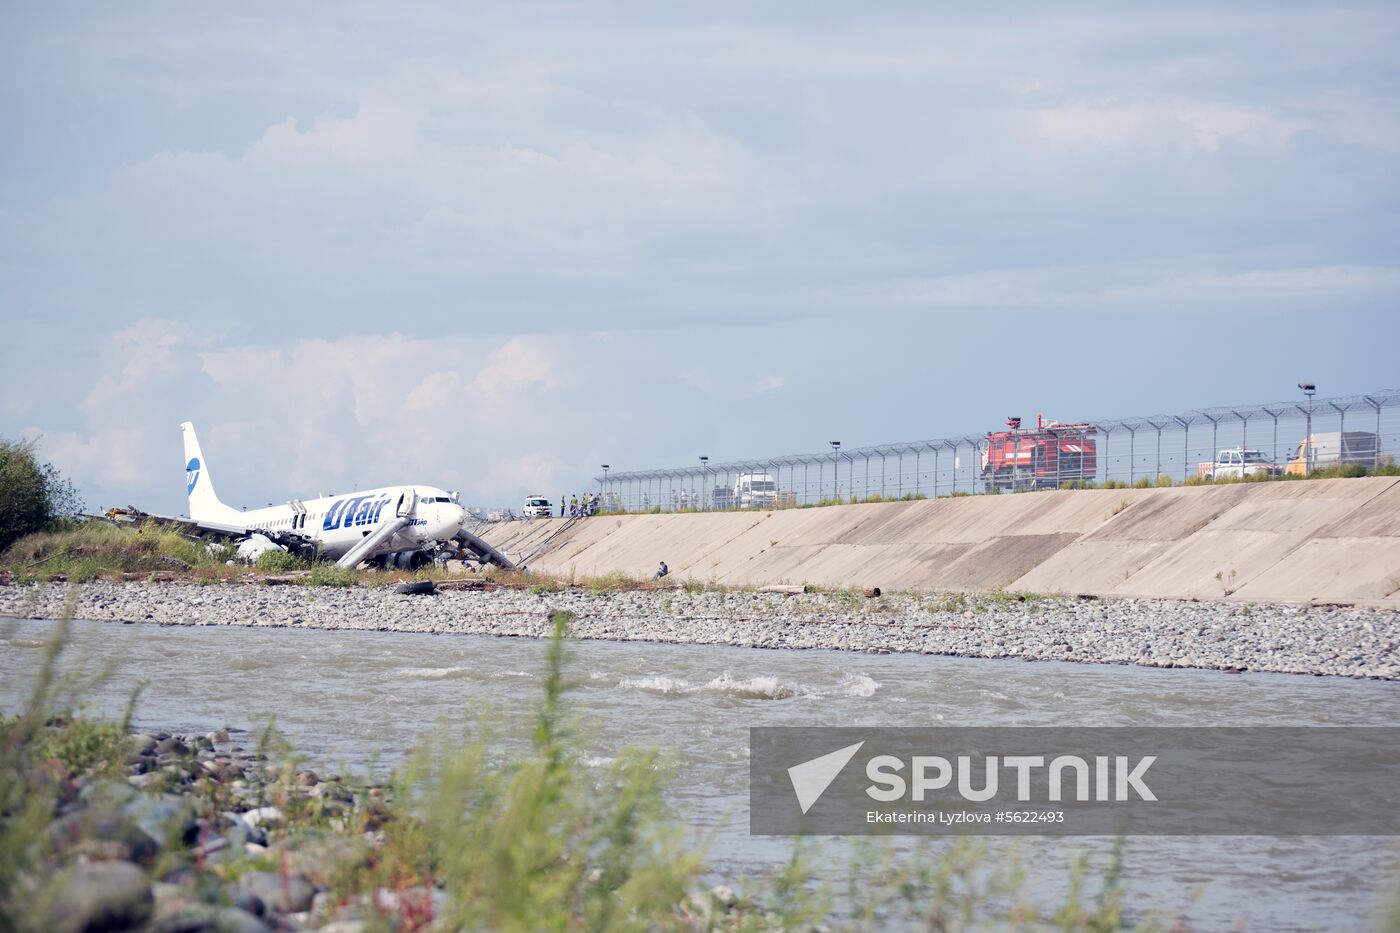 UTAir plane makes emergency landing in Sochi